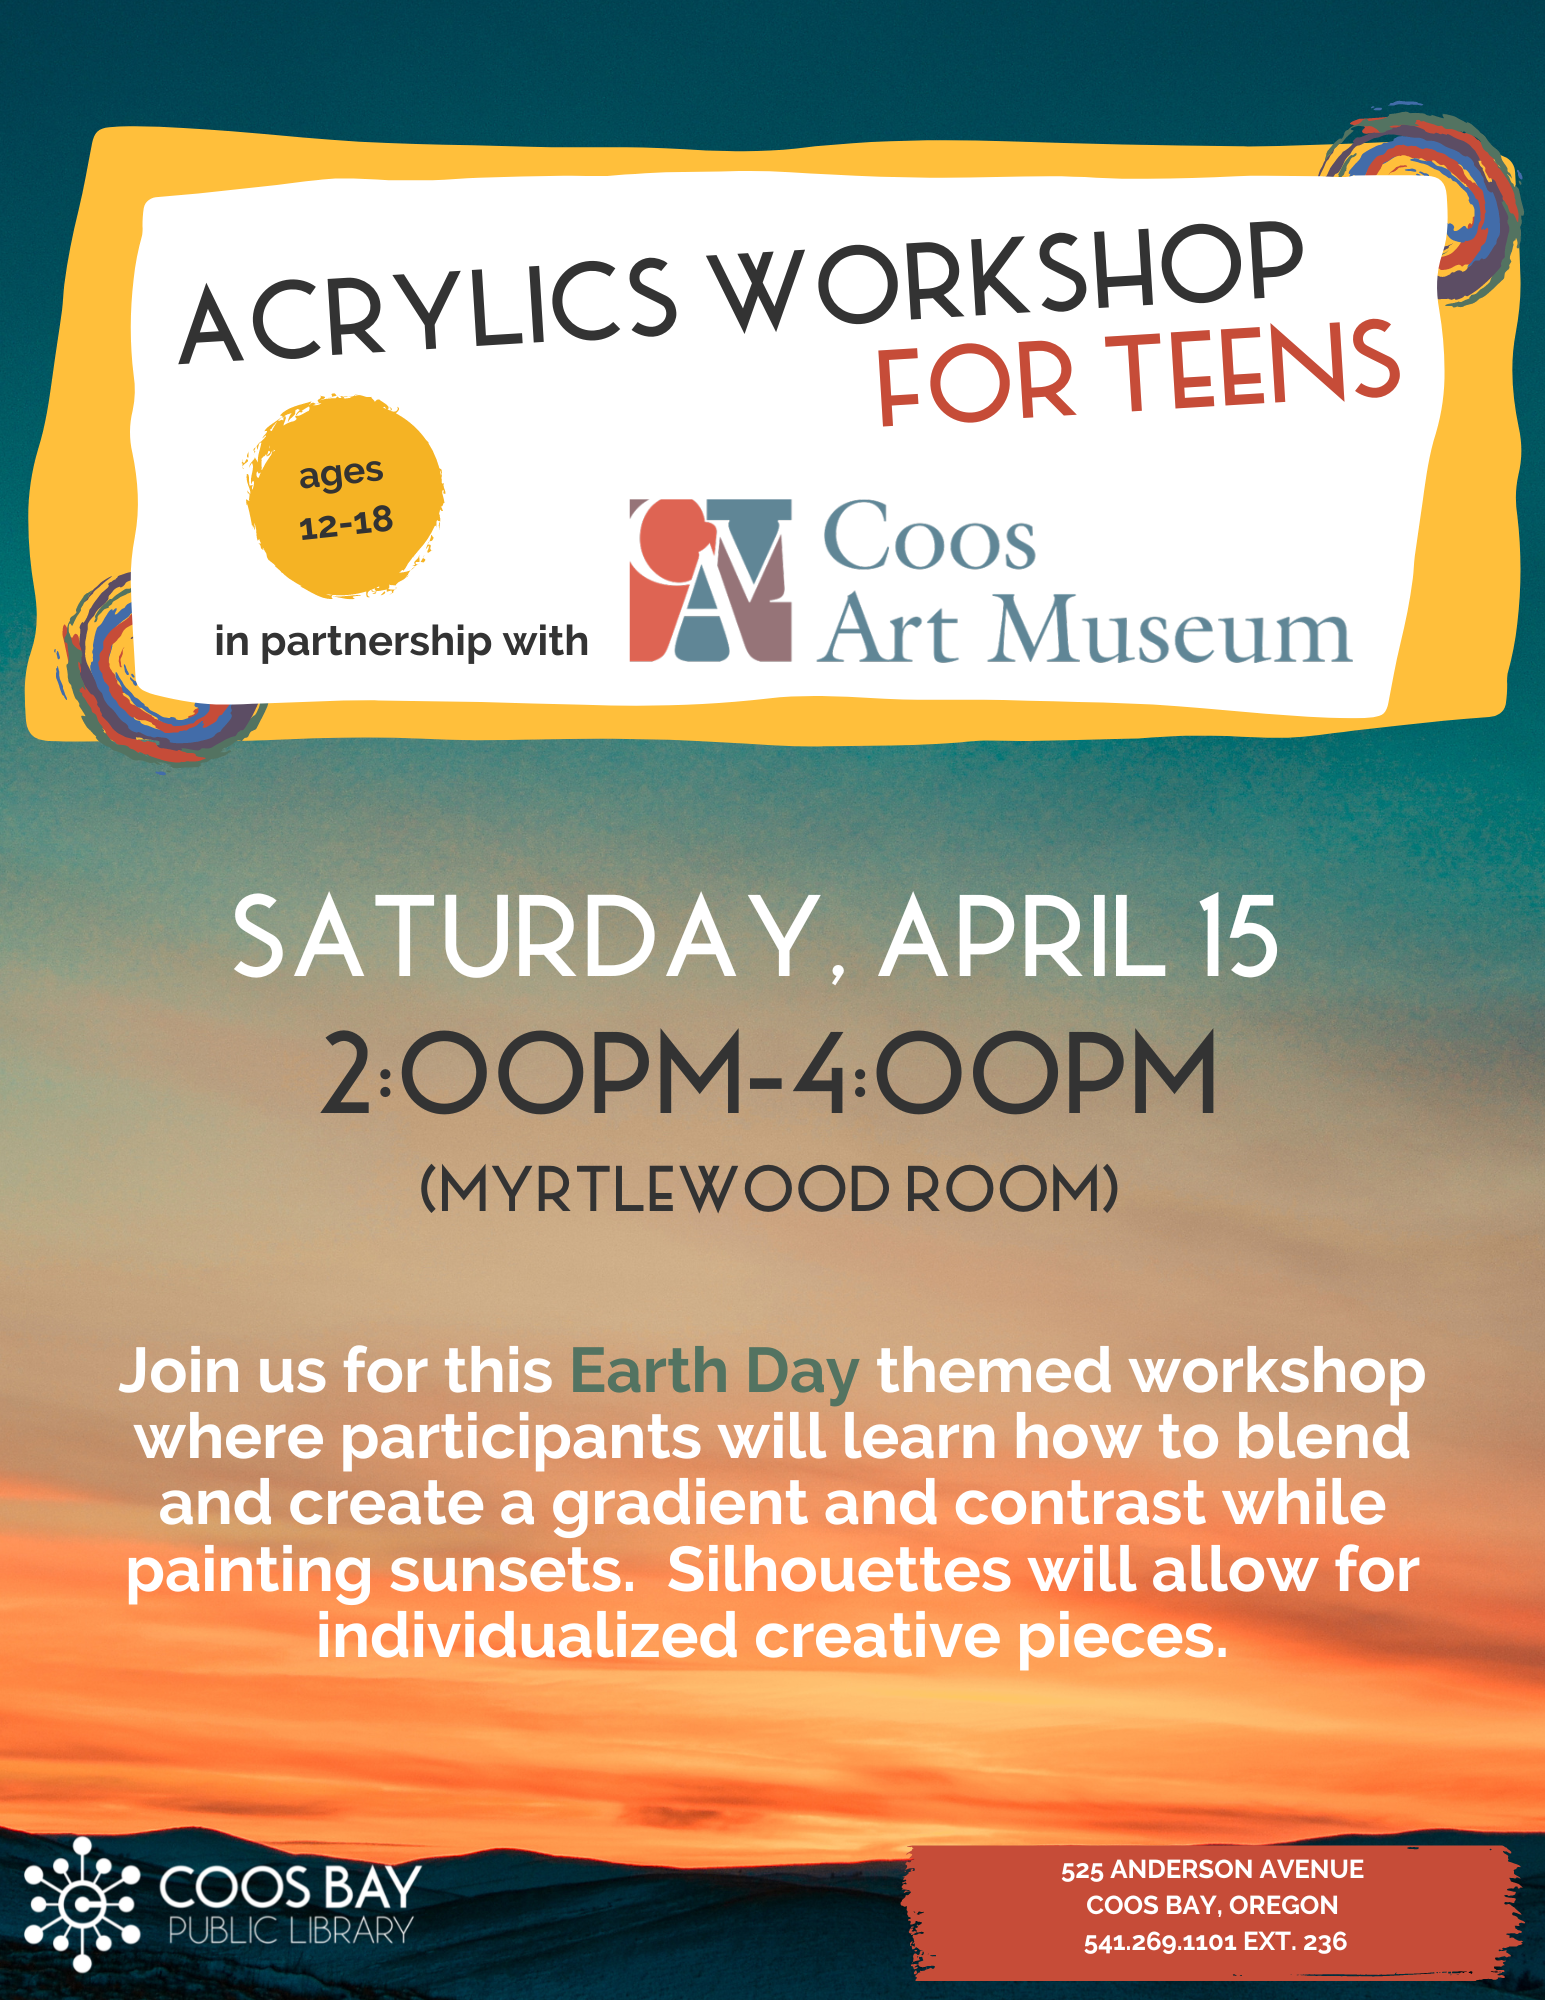 Flyer for acrylics workshop for teens